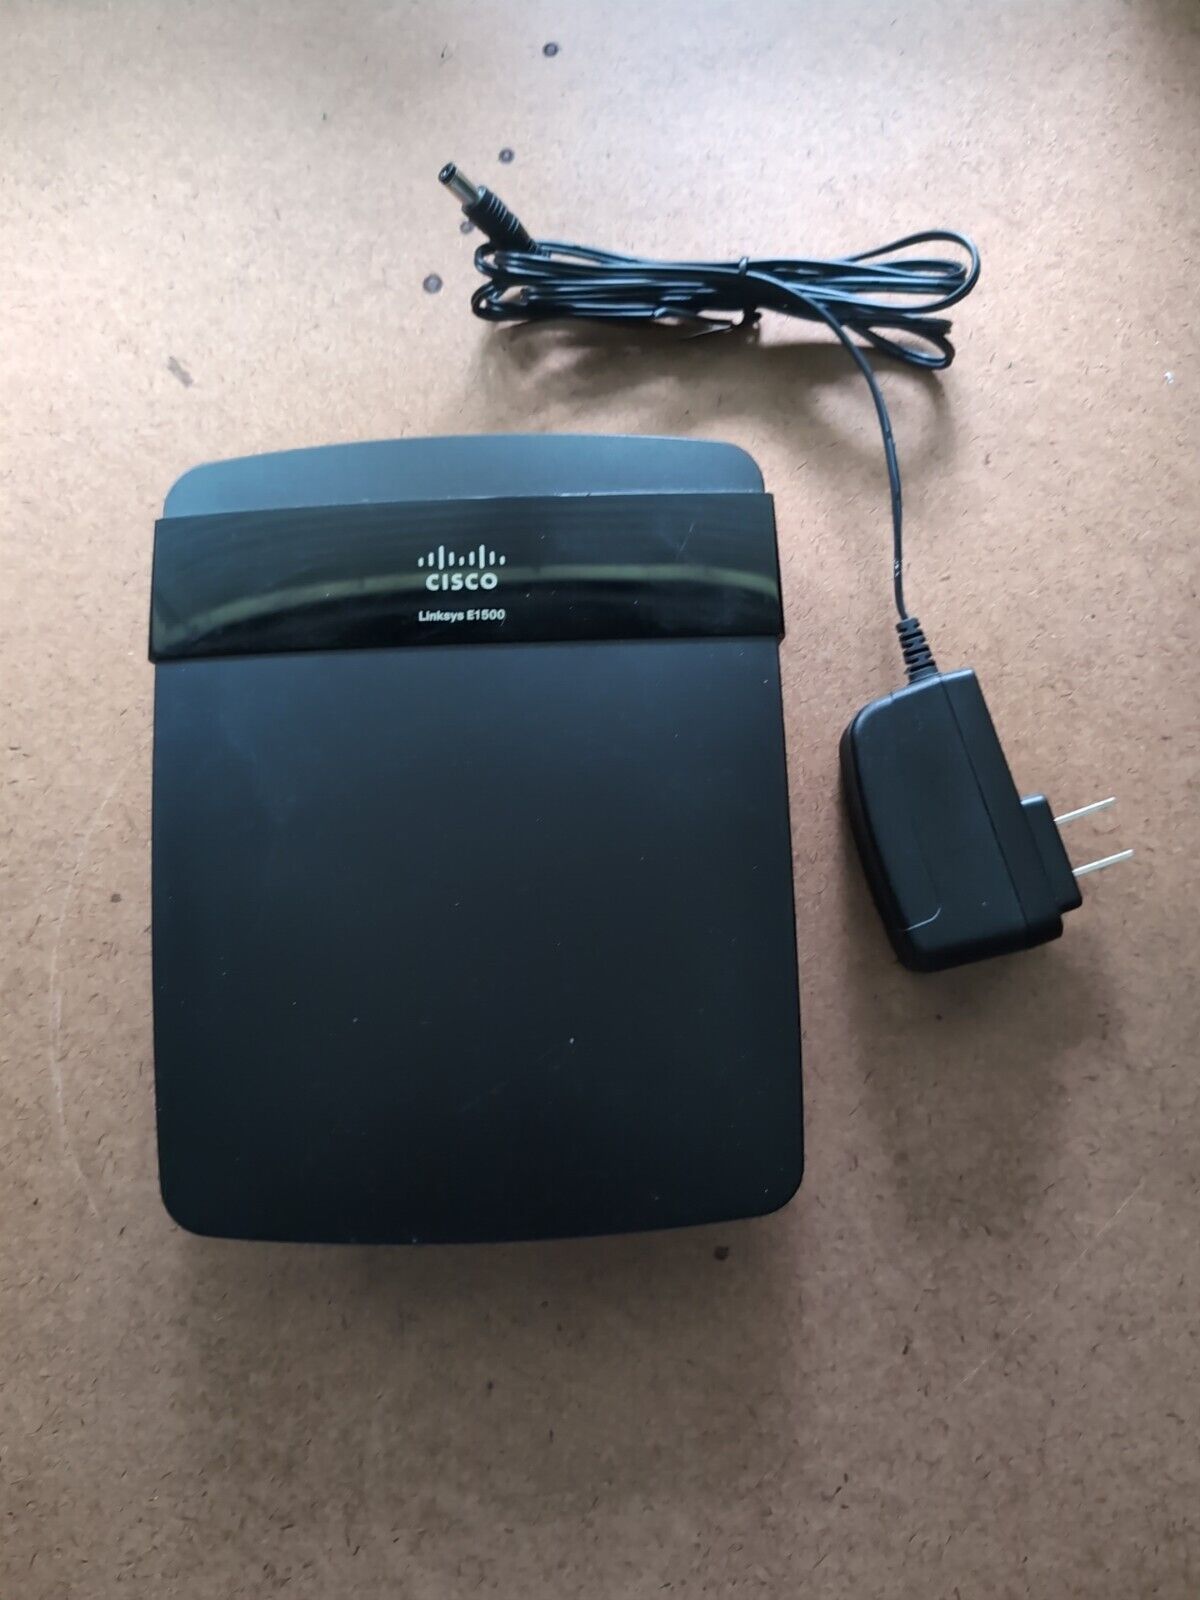 Cisco Linksys E1500 4-Port 300MB Wireless Router 